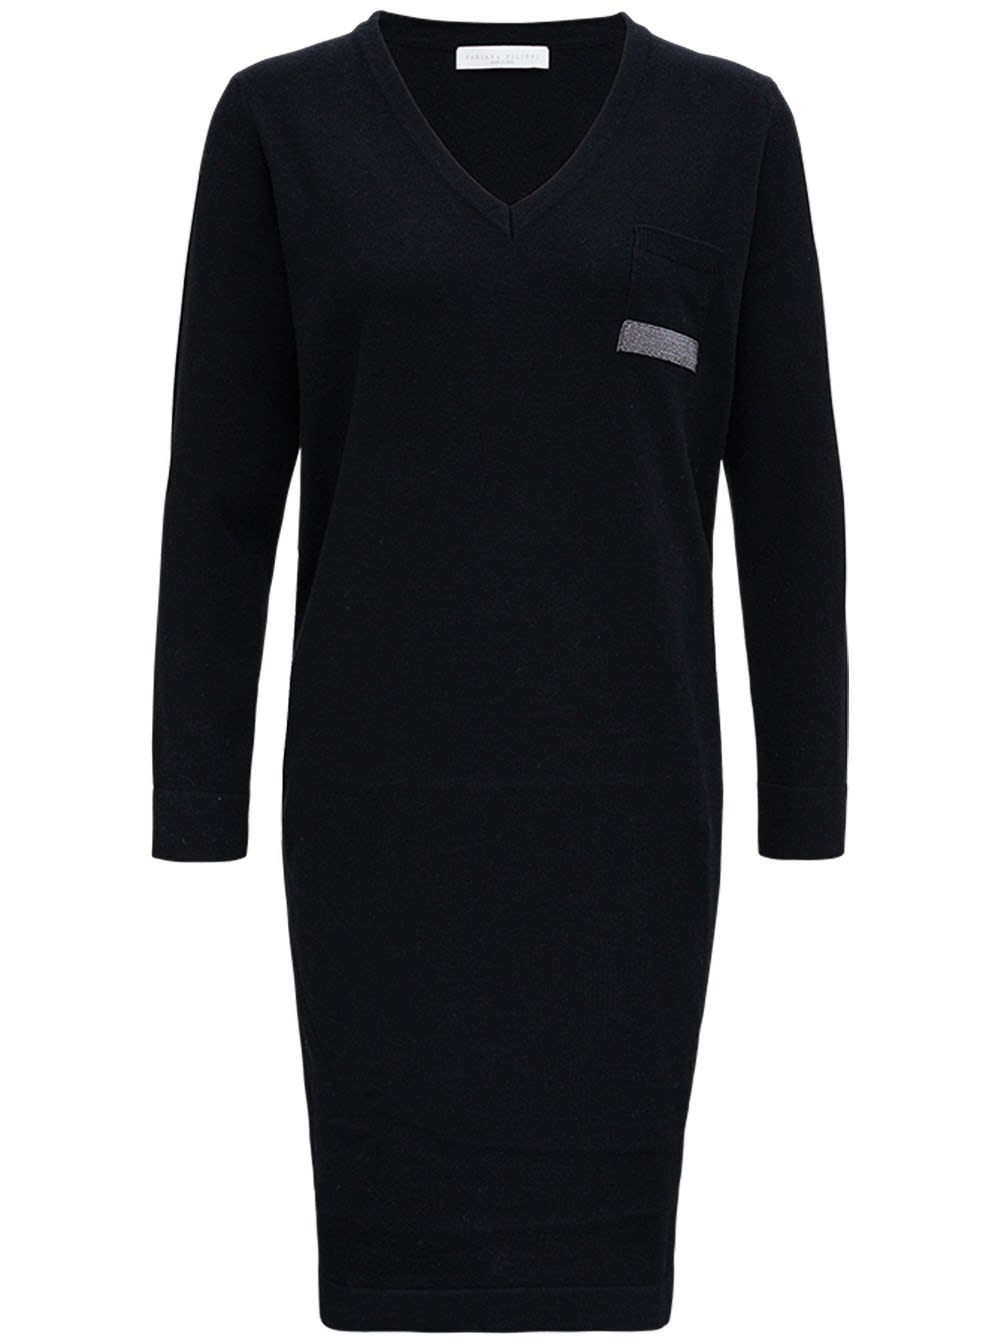 Fabiana Filippi Black Silk And Cashmere Dress With Bright Detail